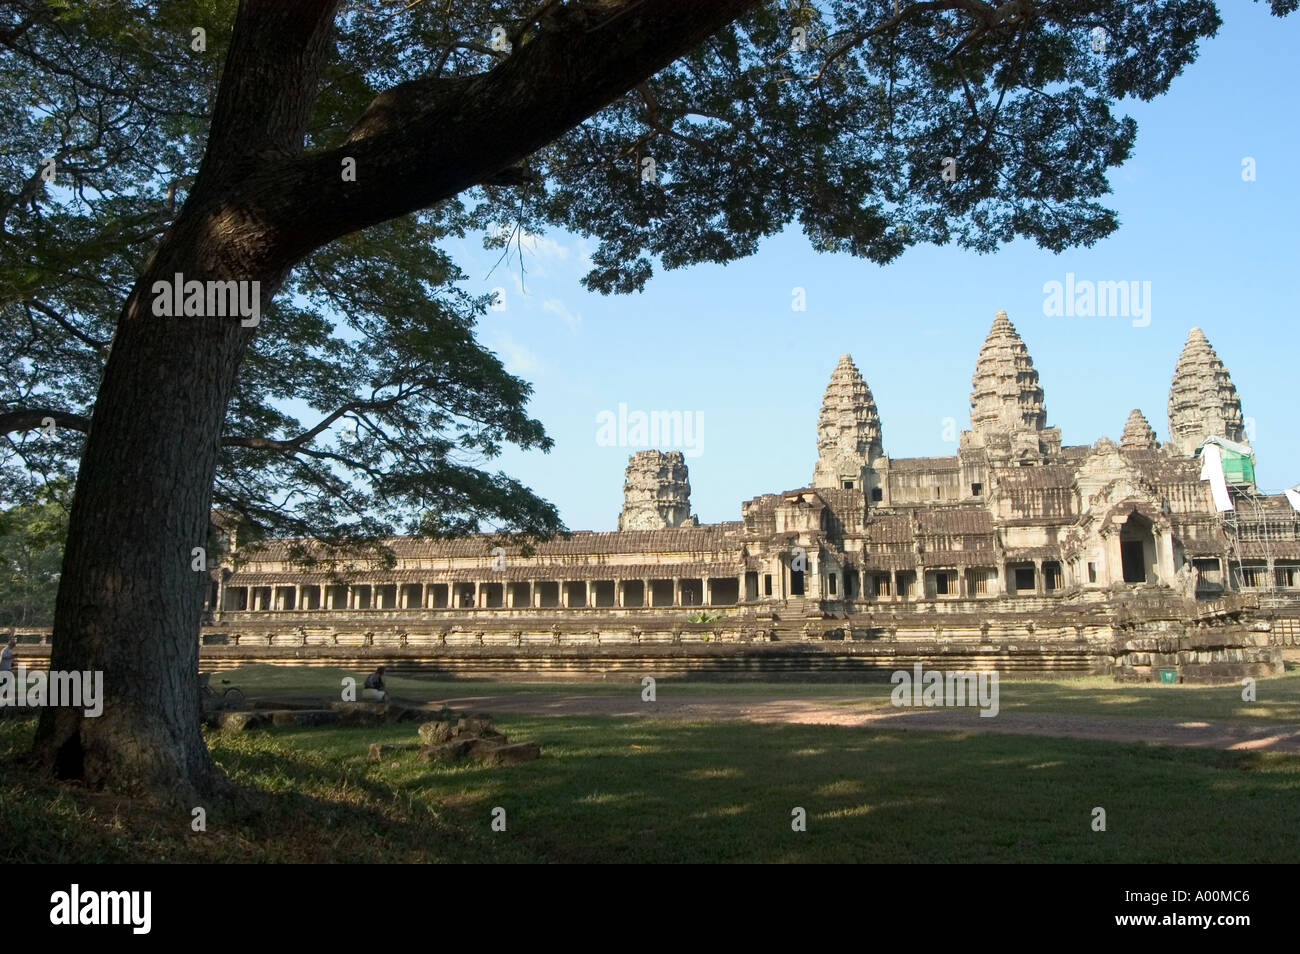 Ankor Wat Cambogia del Sud-est asiatico Foto Stock